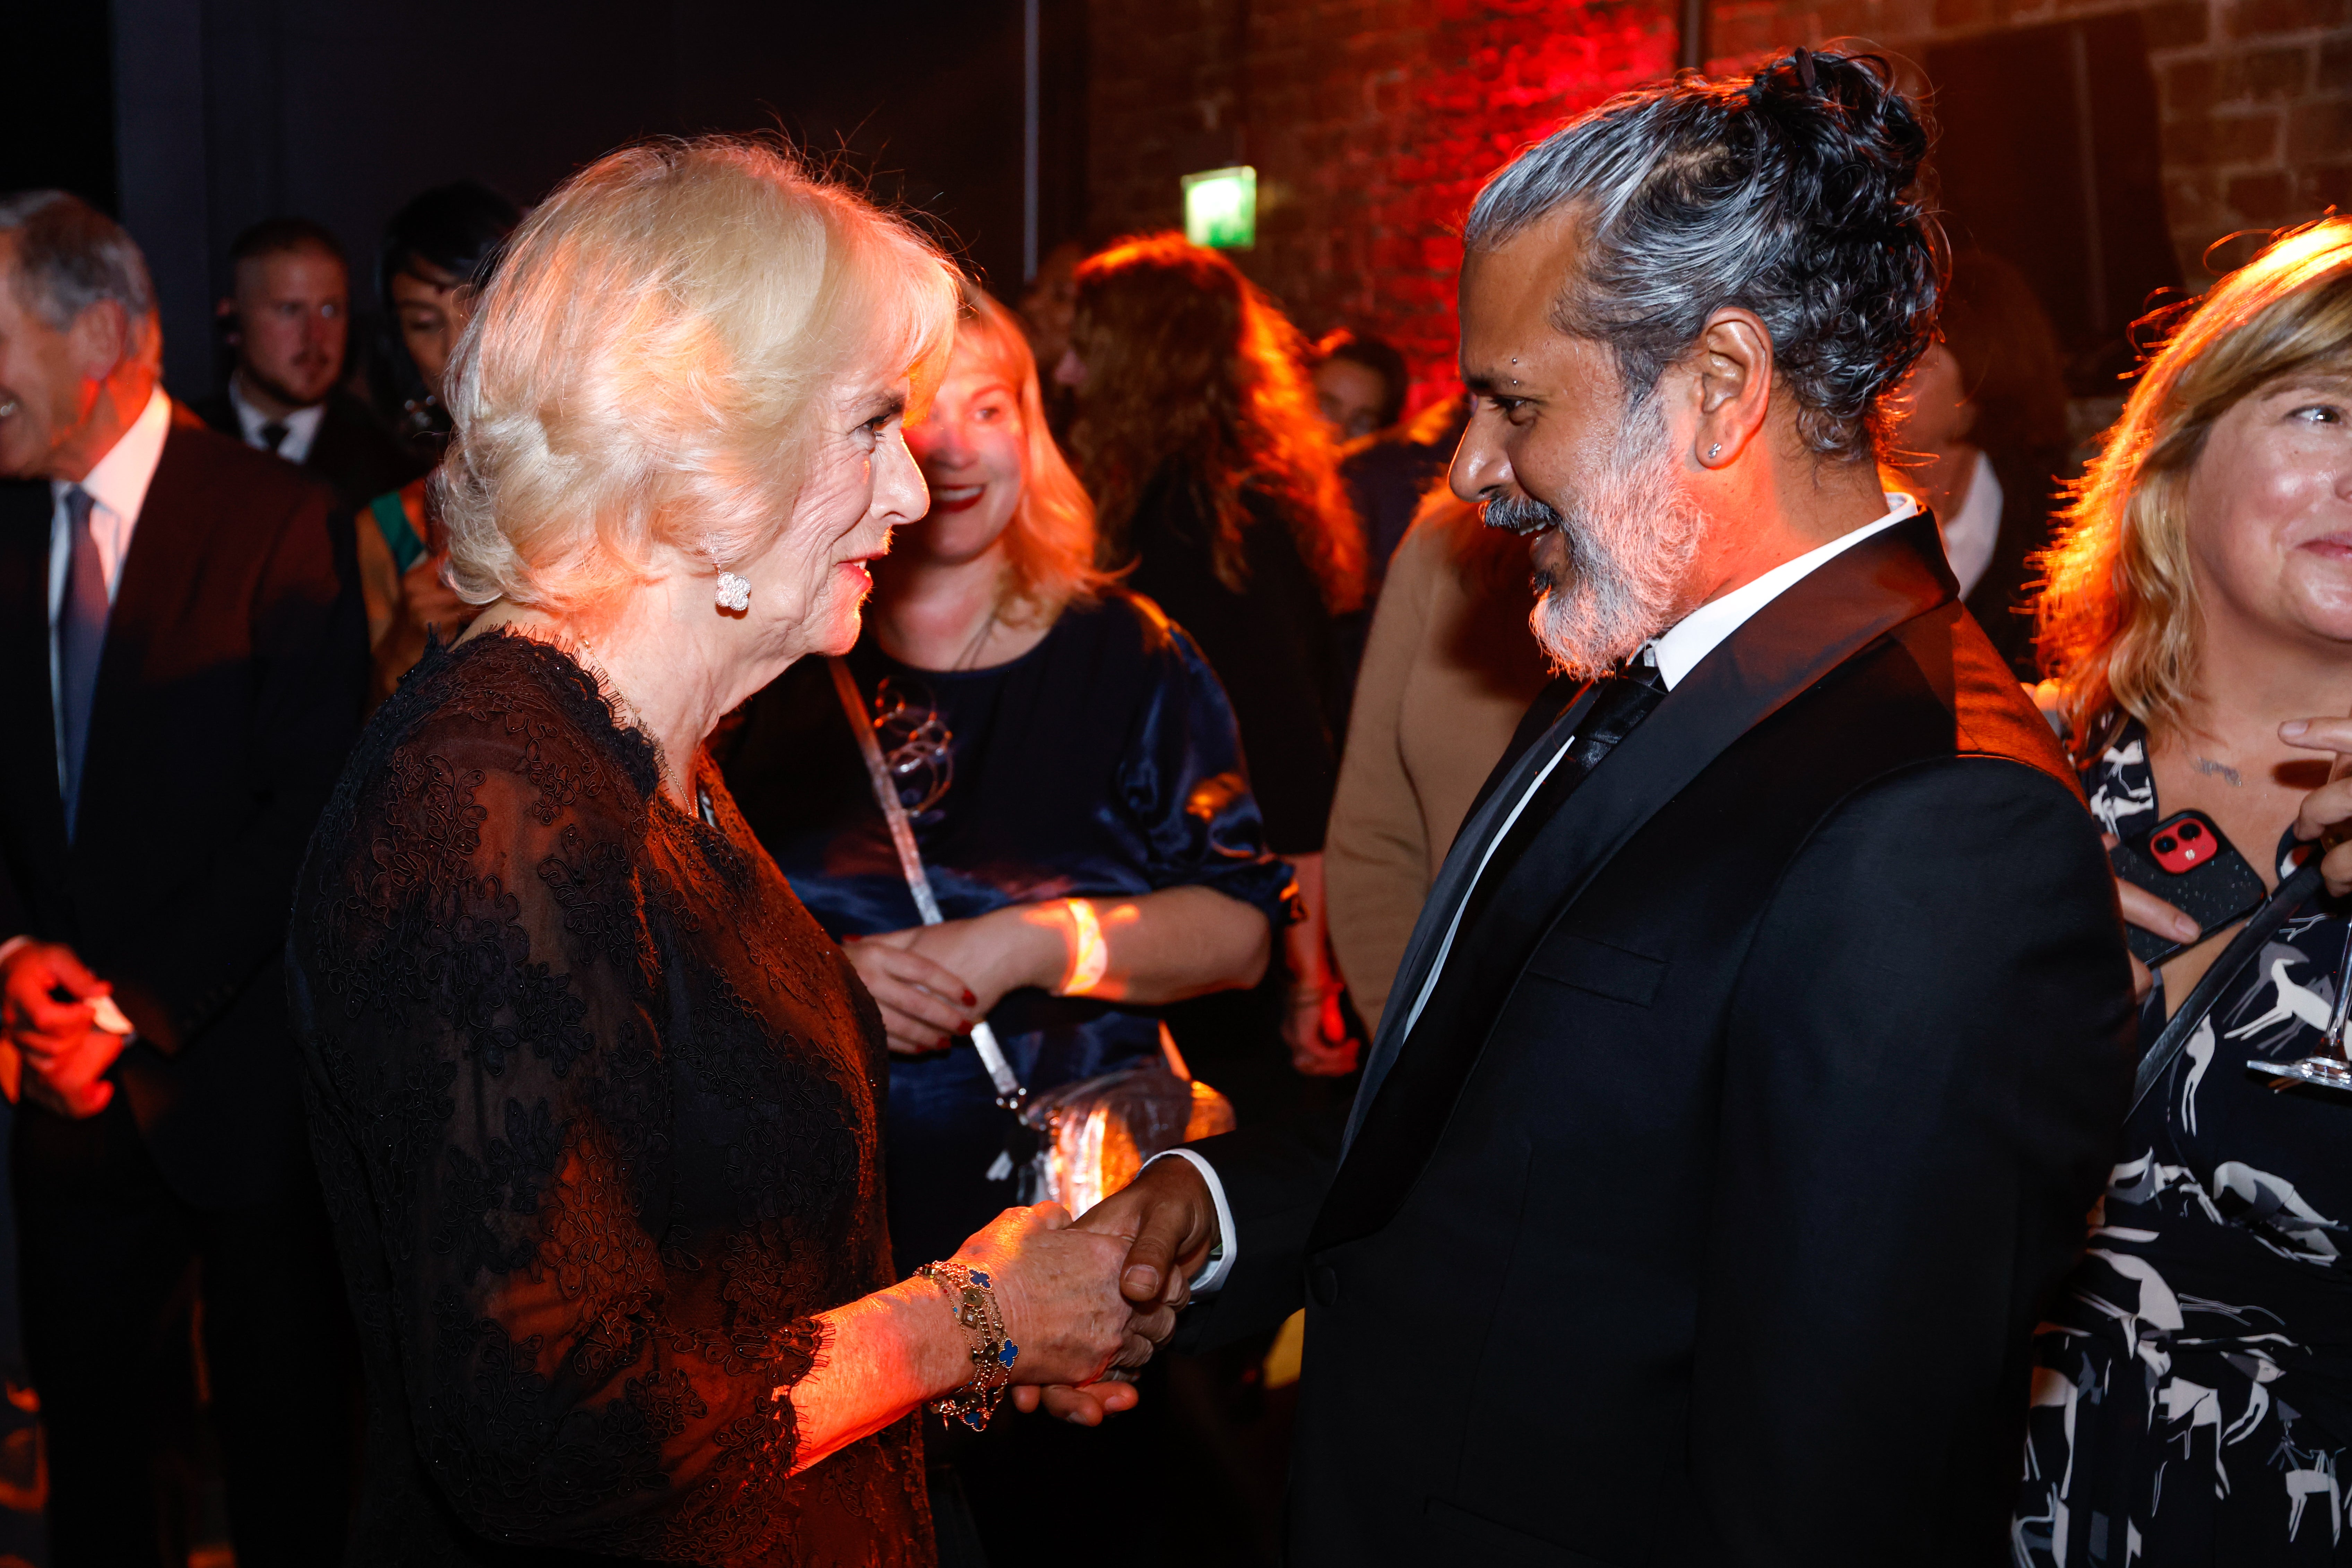 The Queen Consort meets Shehan Karunatilaka at the Booker Prize